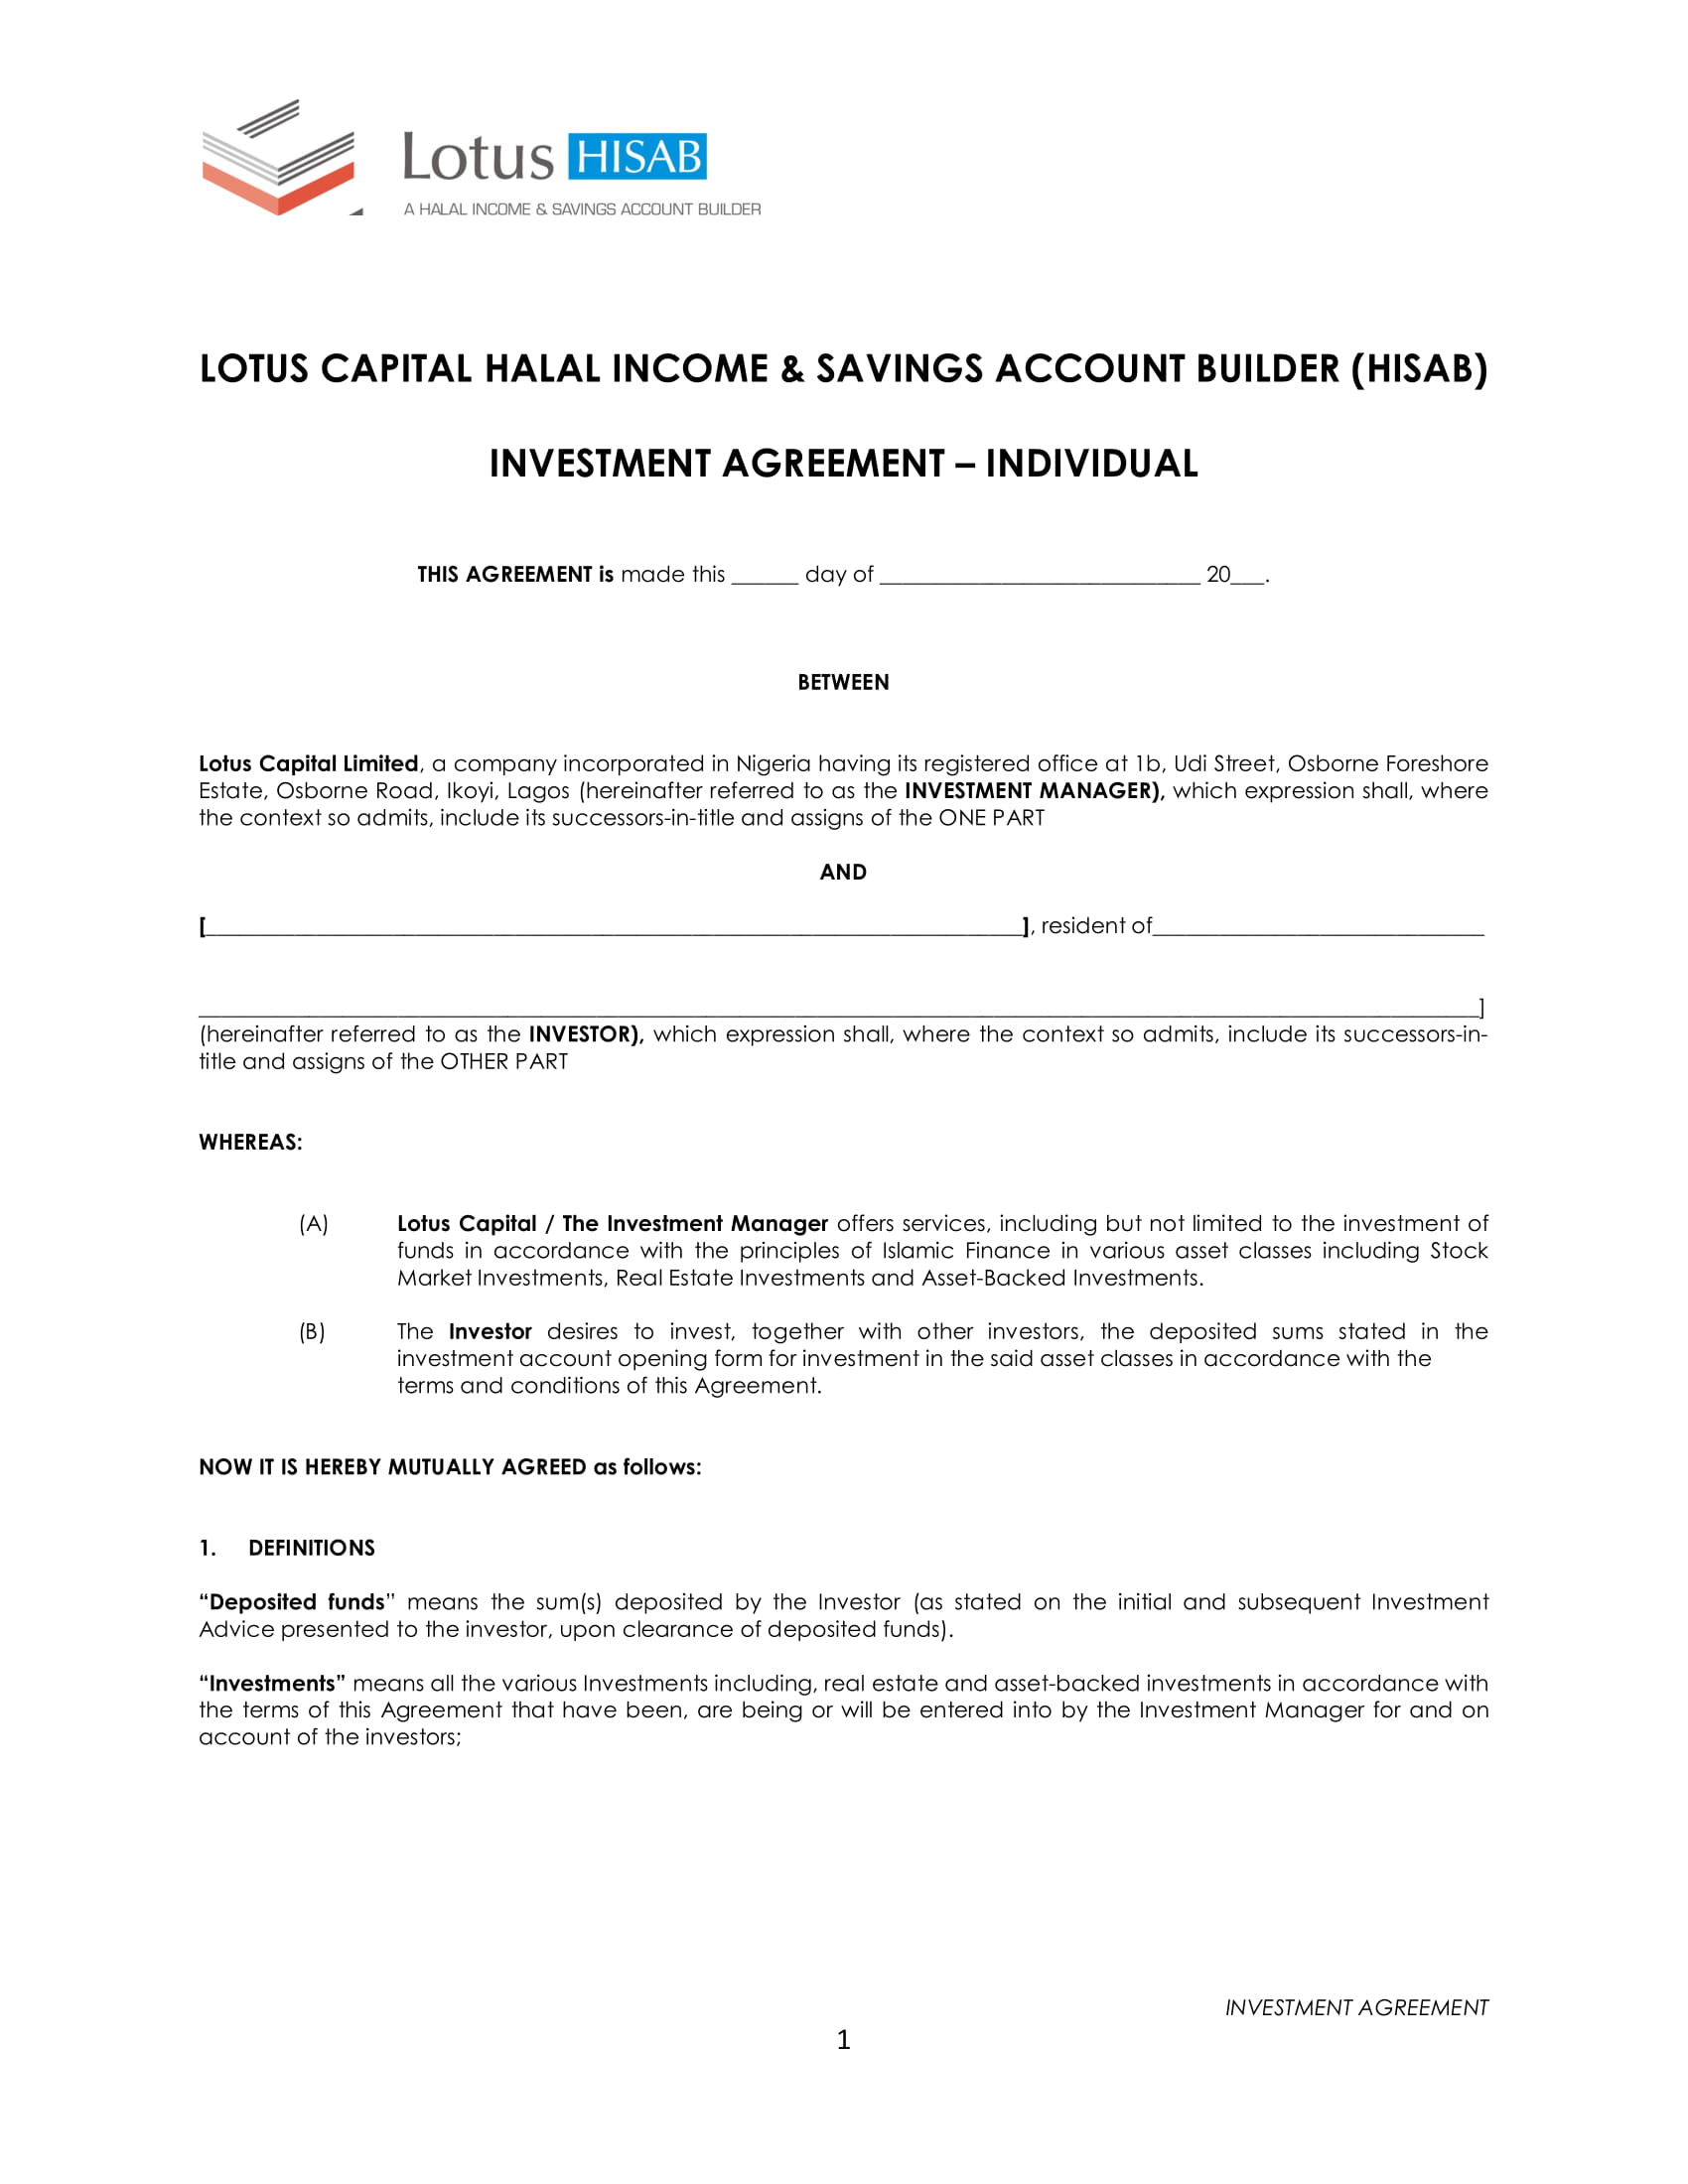 lotus investment agreement